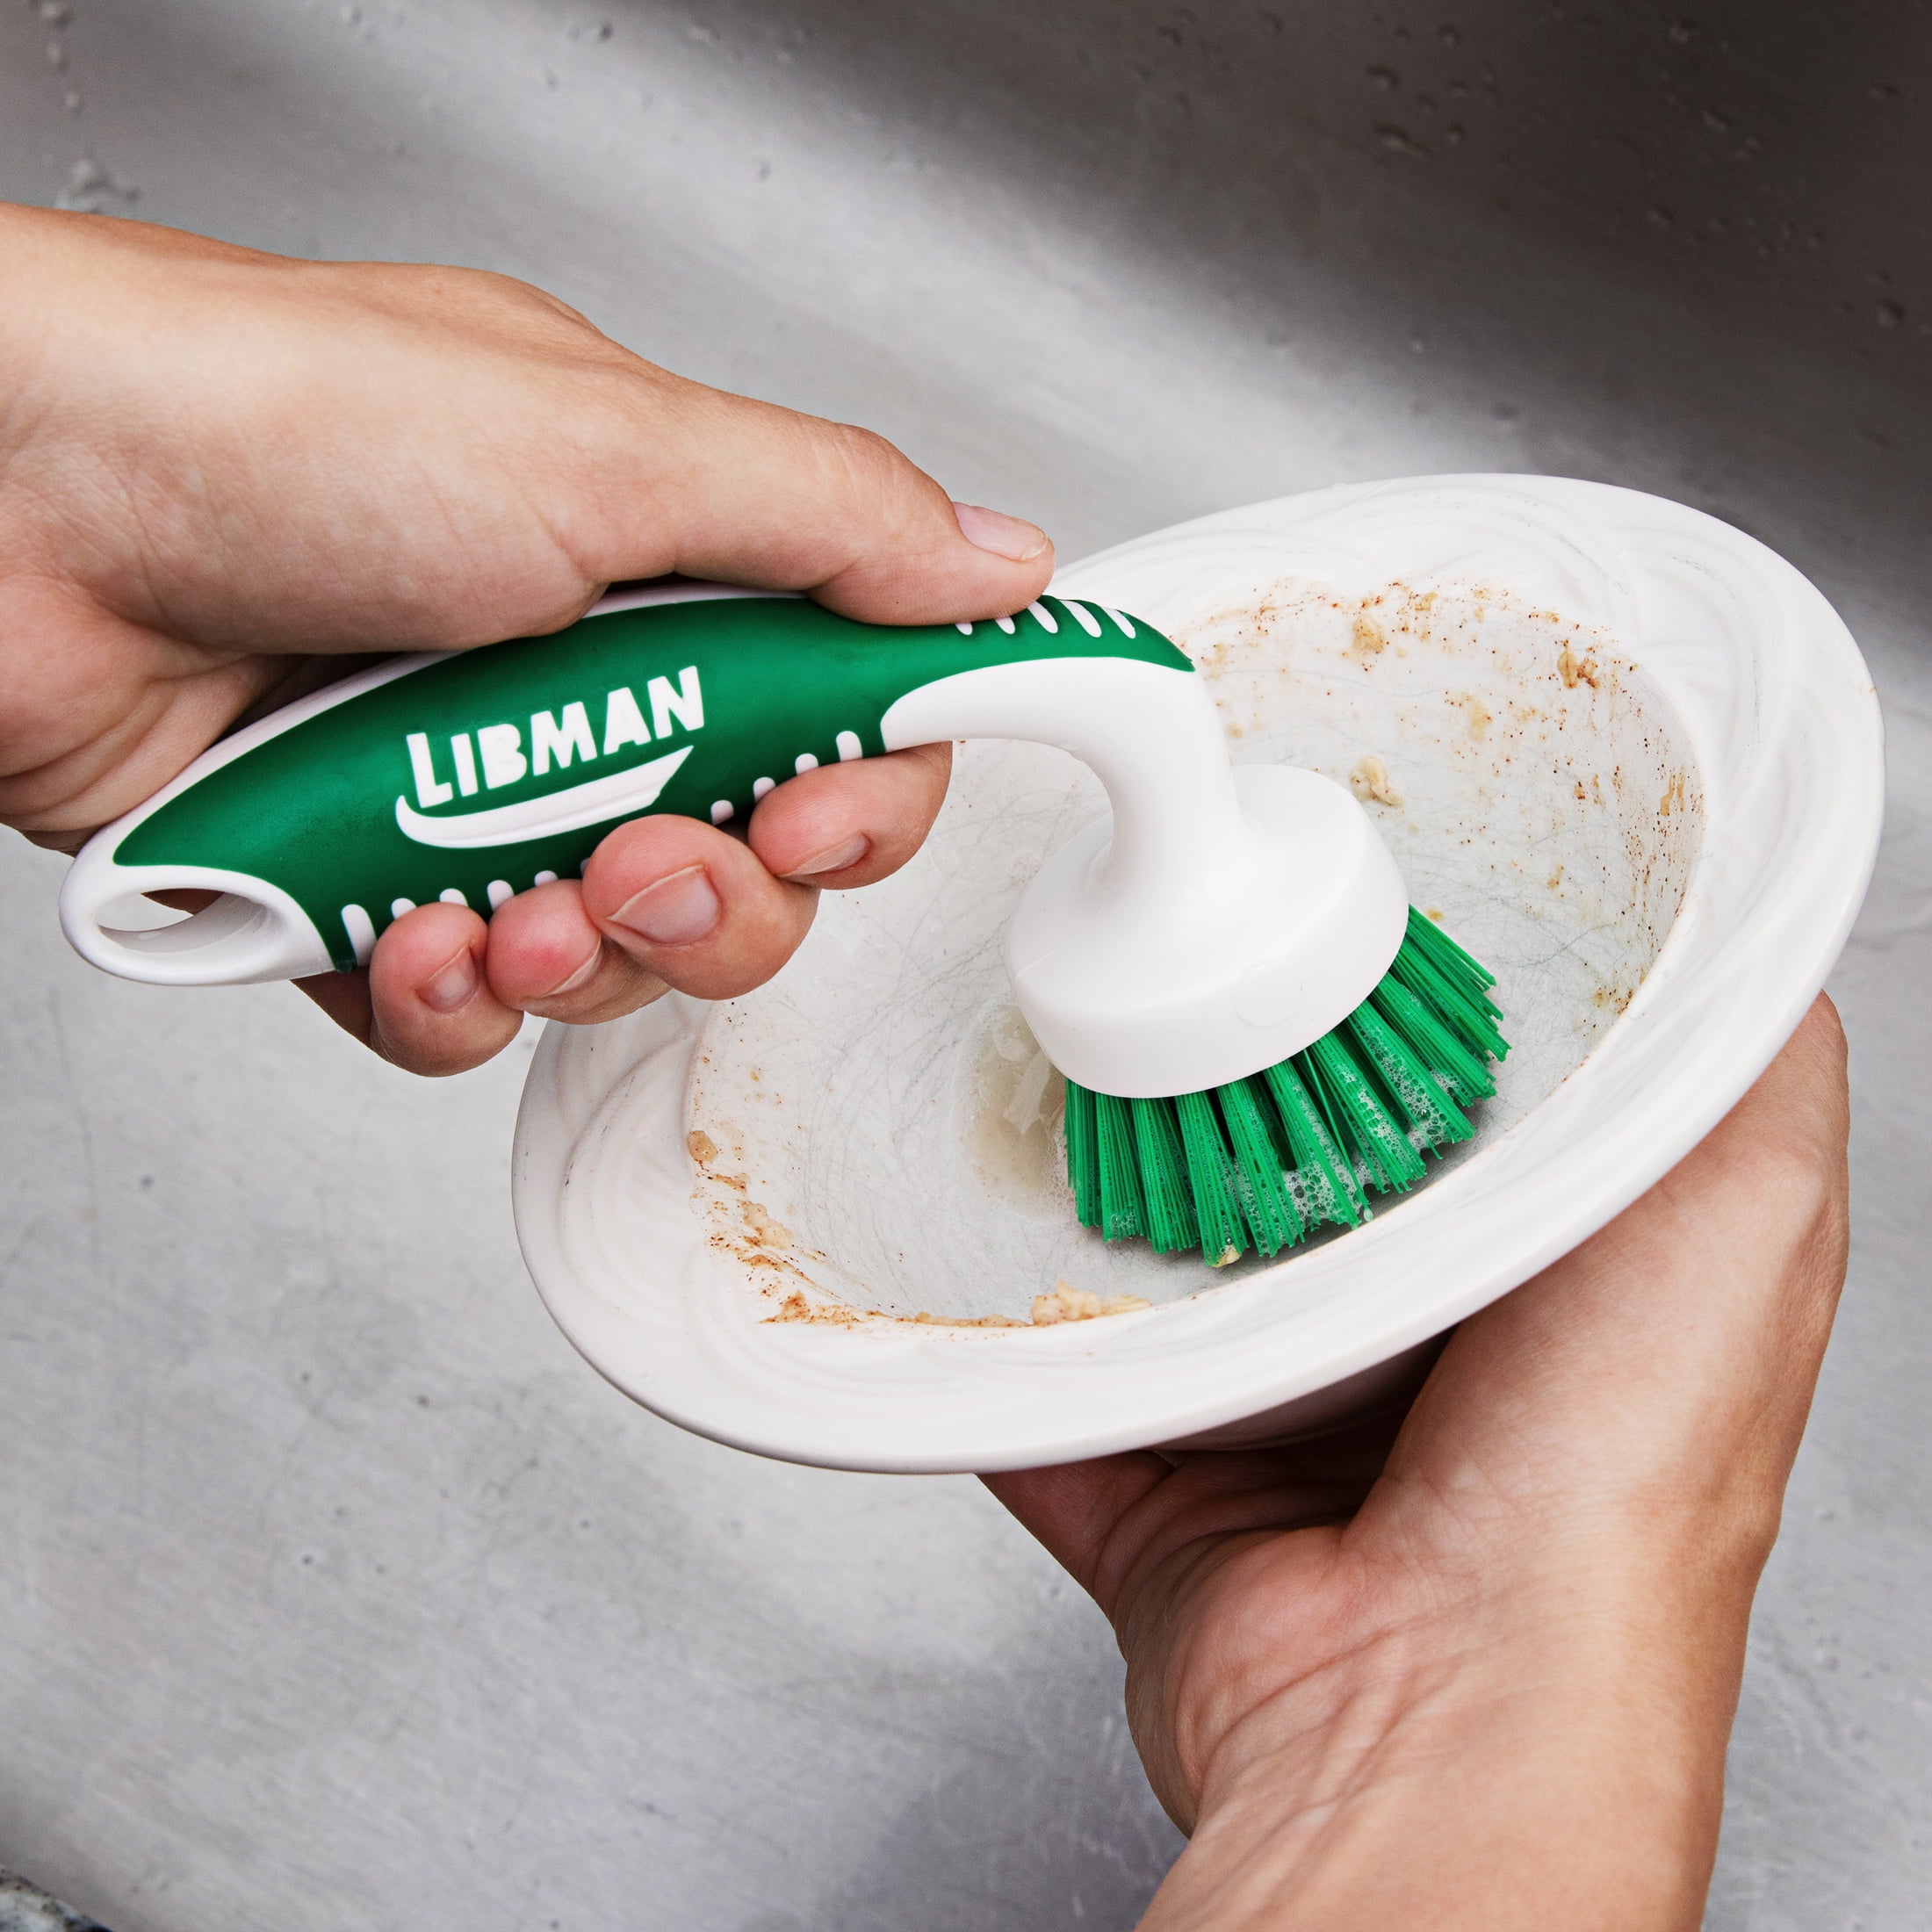 Libman Kitchen Brush 45 - The Home Depot